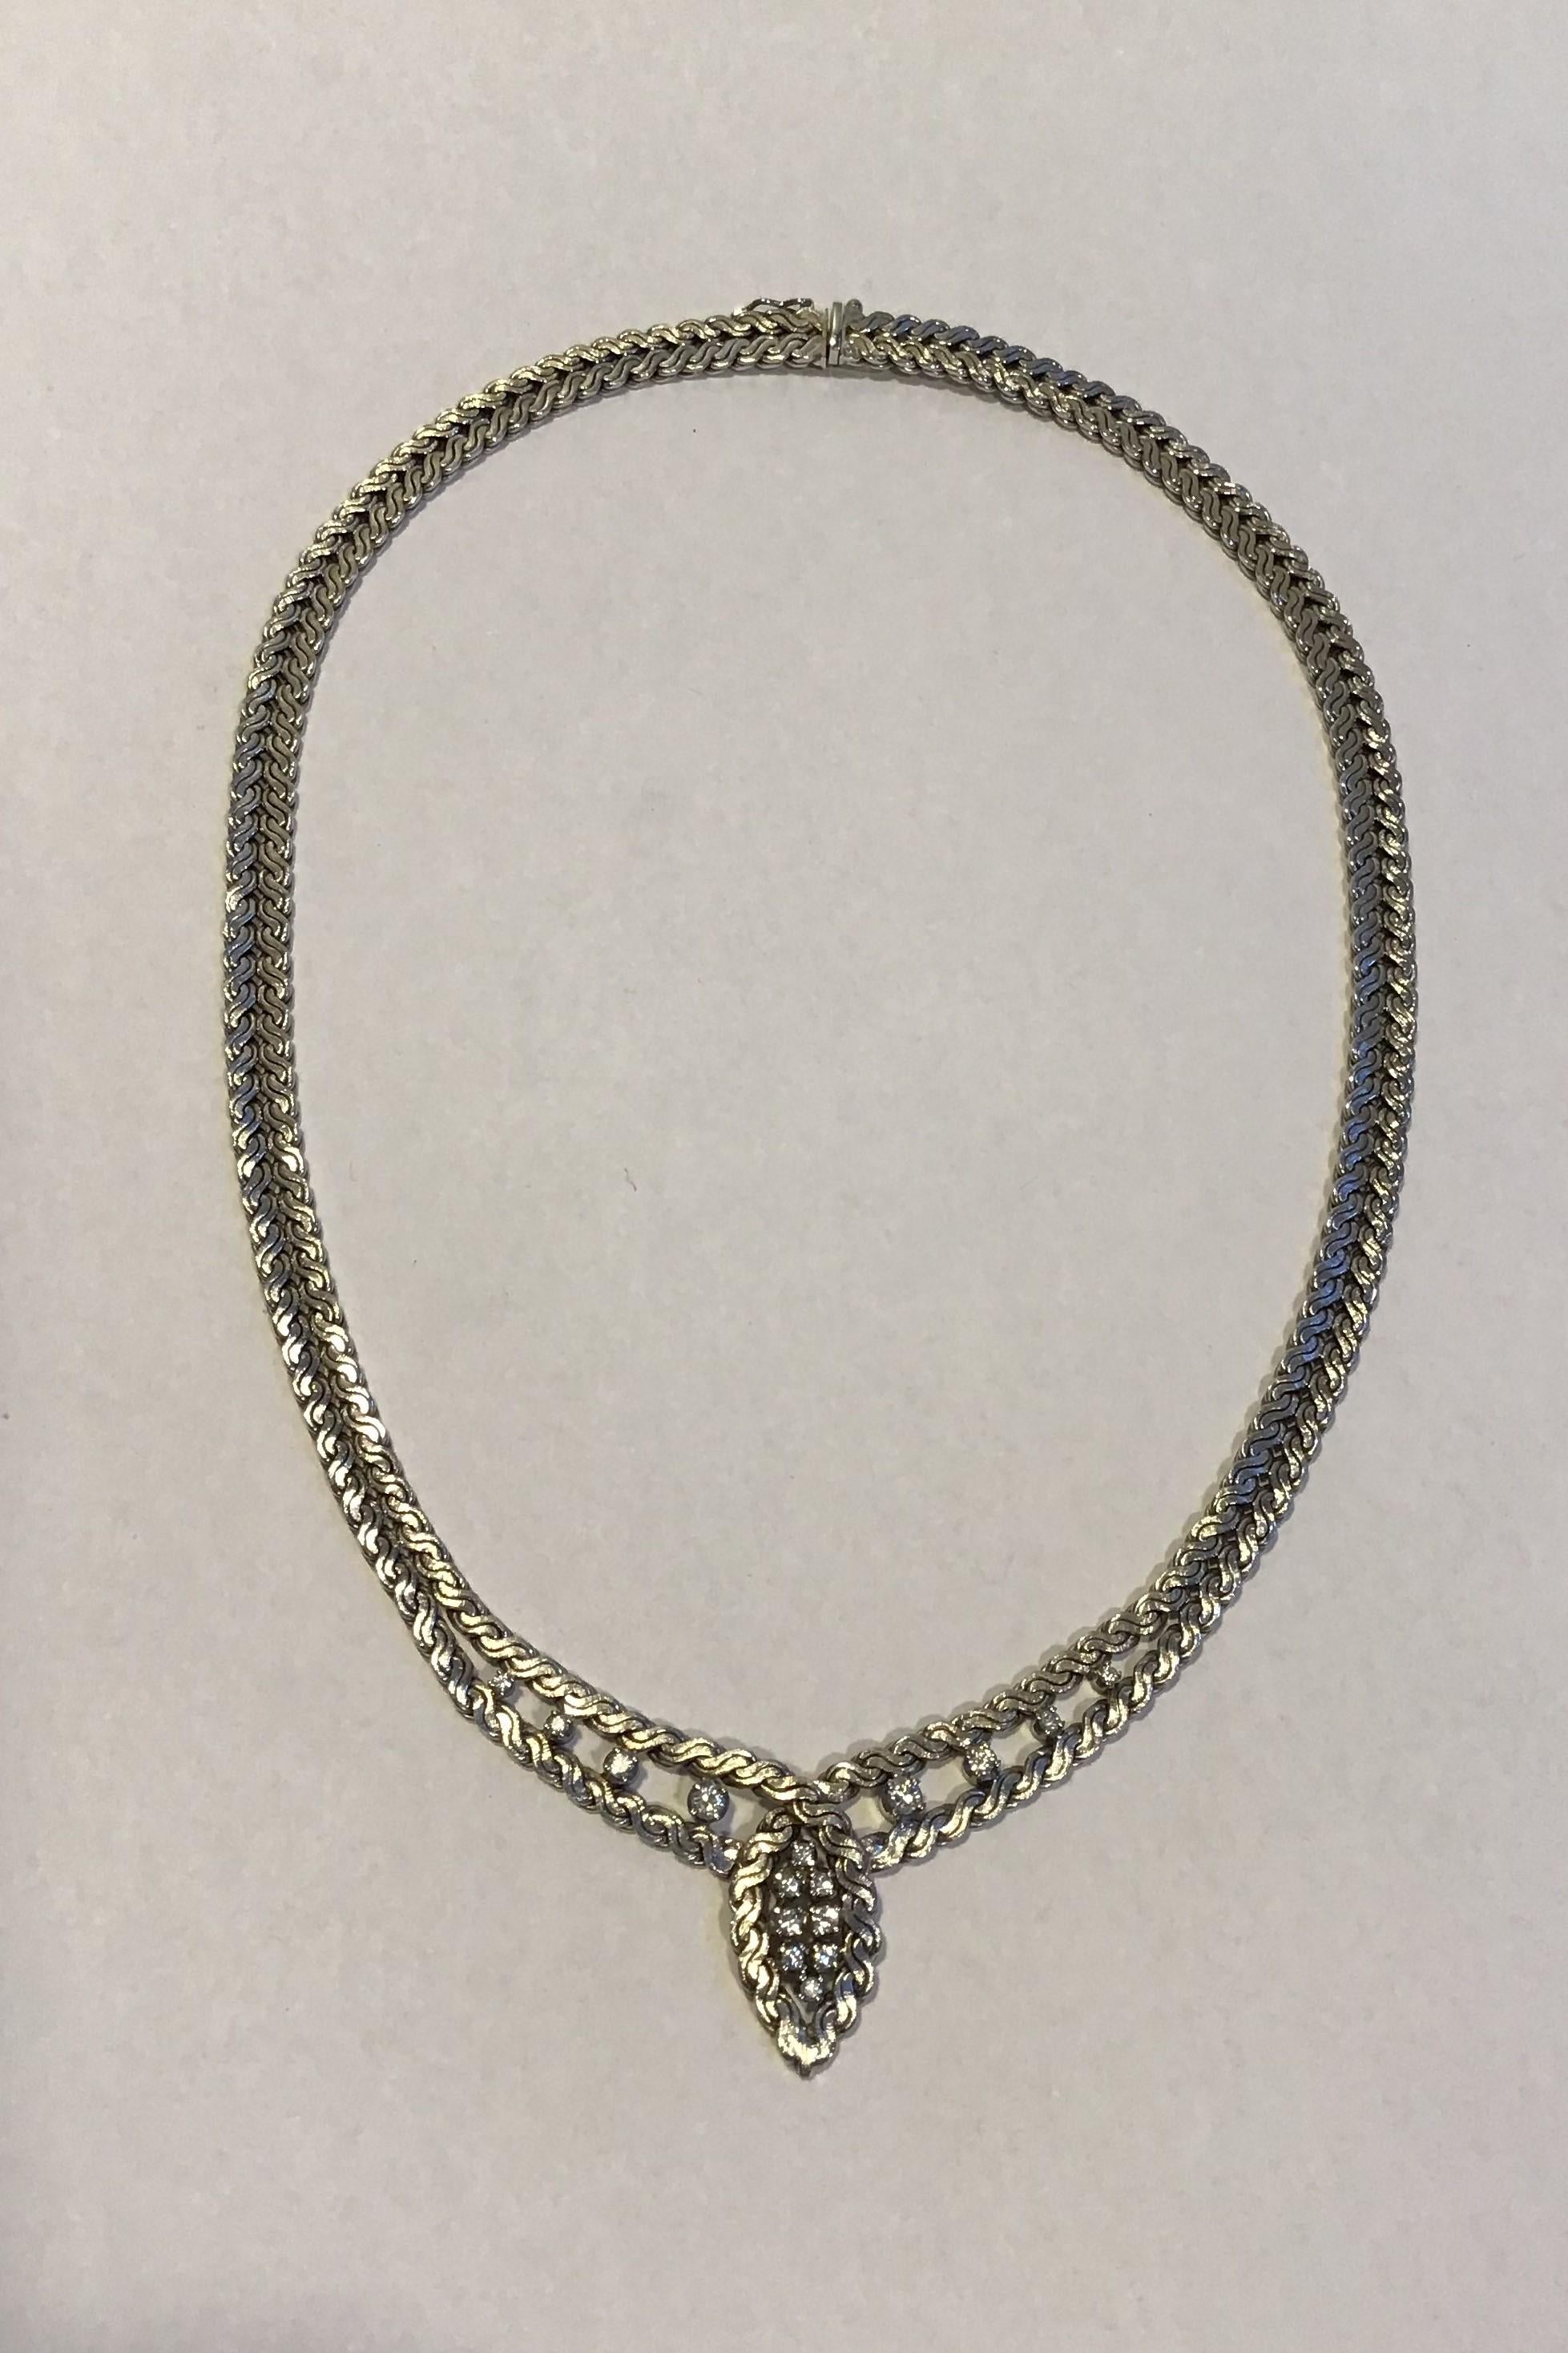 Georg Jensen & Wendel 18K Whitegold Necklace with Brillant cut Diamonds 

Measures 42 cm (16 17/32 in) 
Weight 51.5 gr/1.82 oz